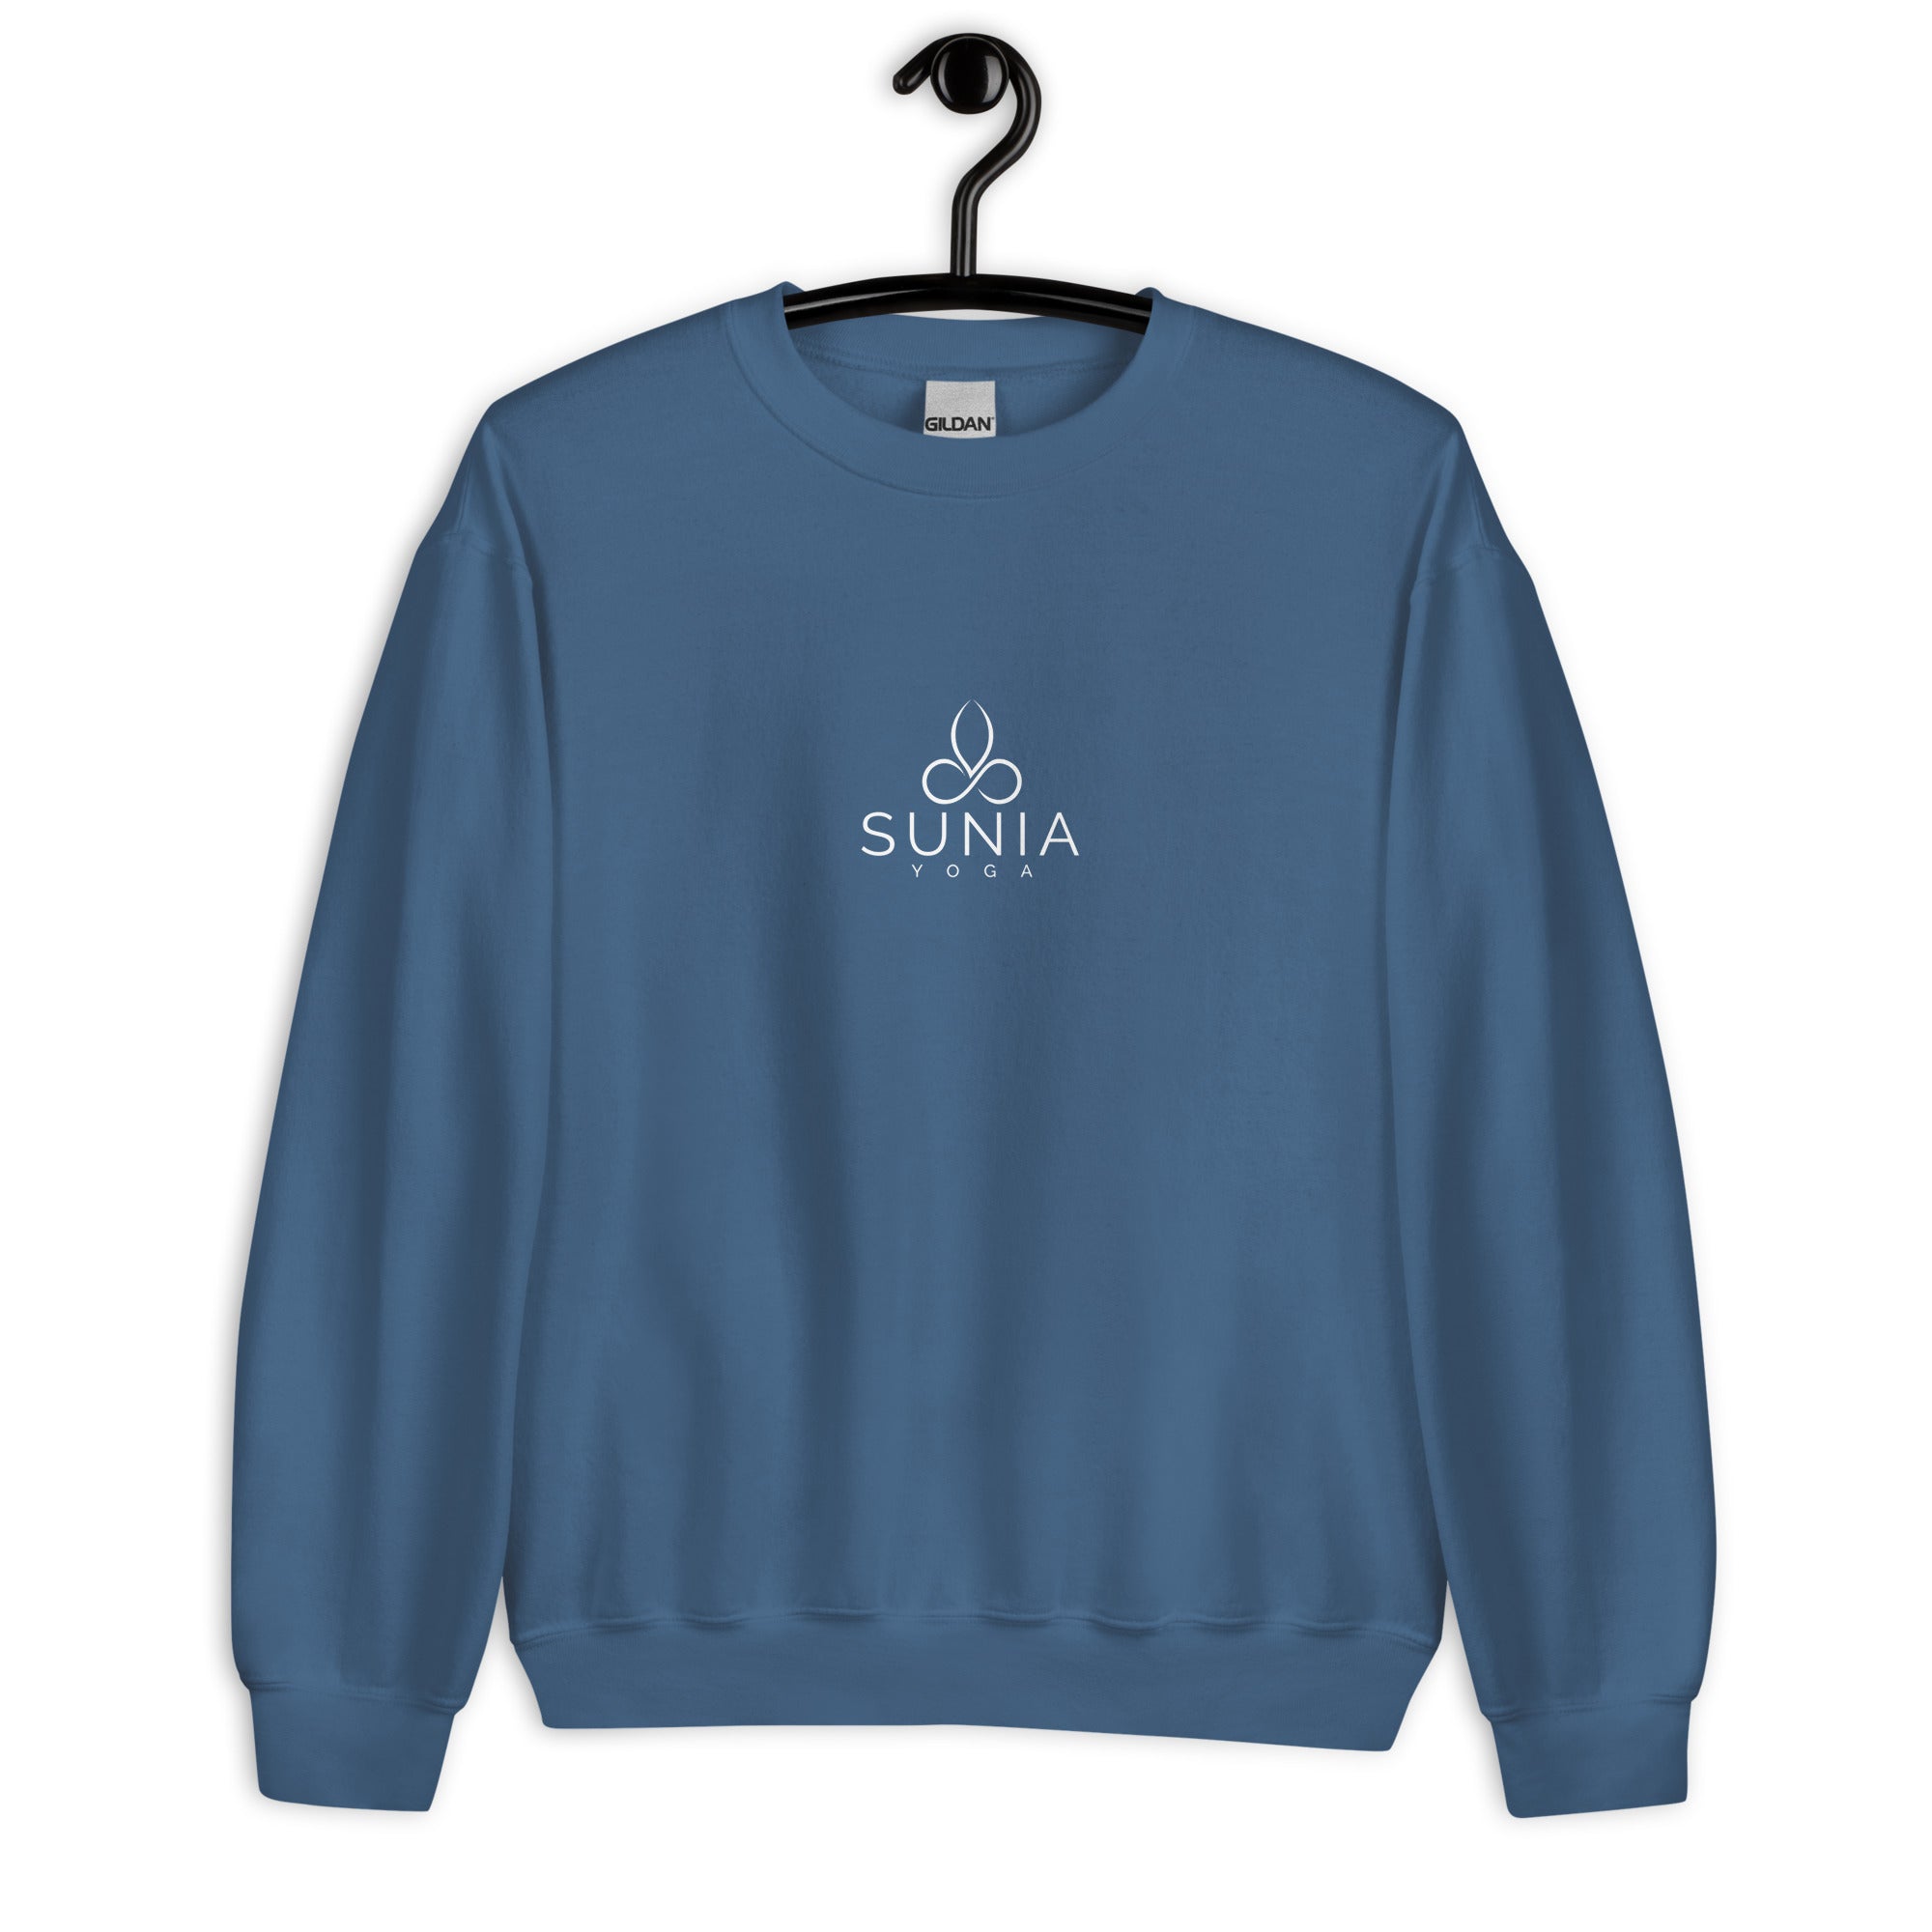 Sunia Yoga Sweatshirt